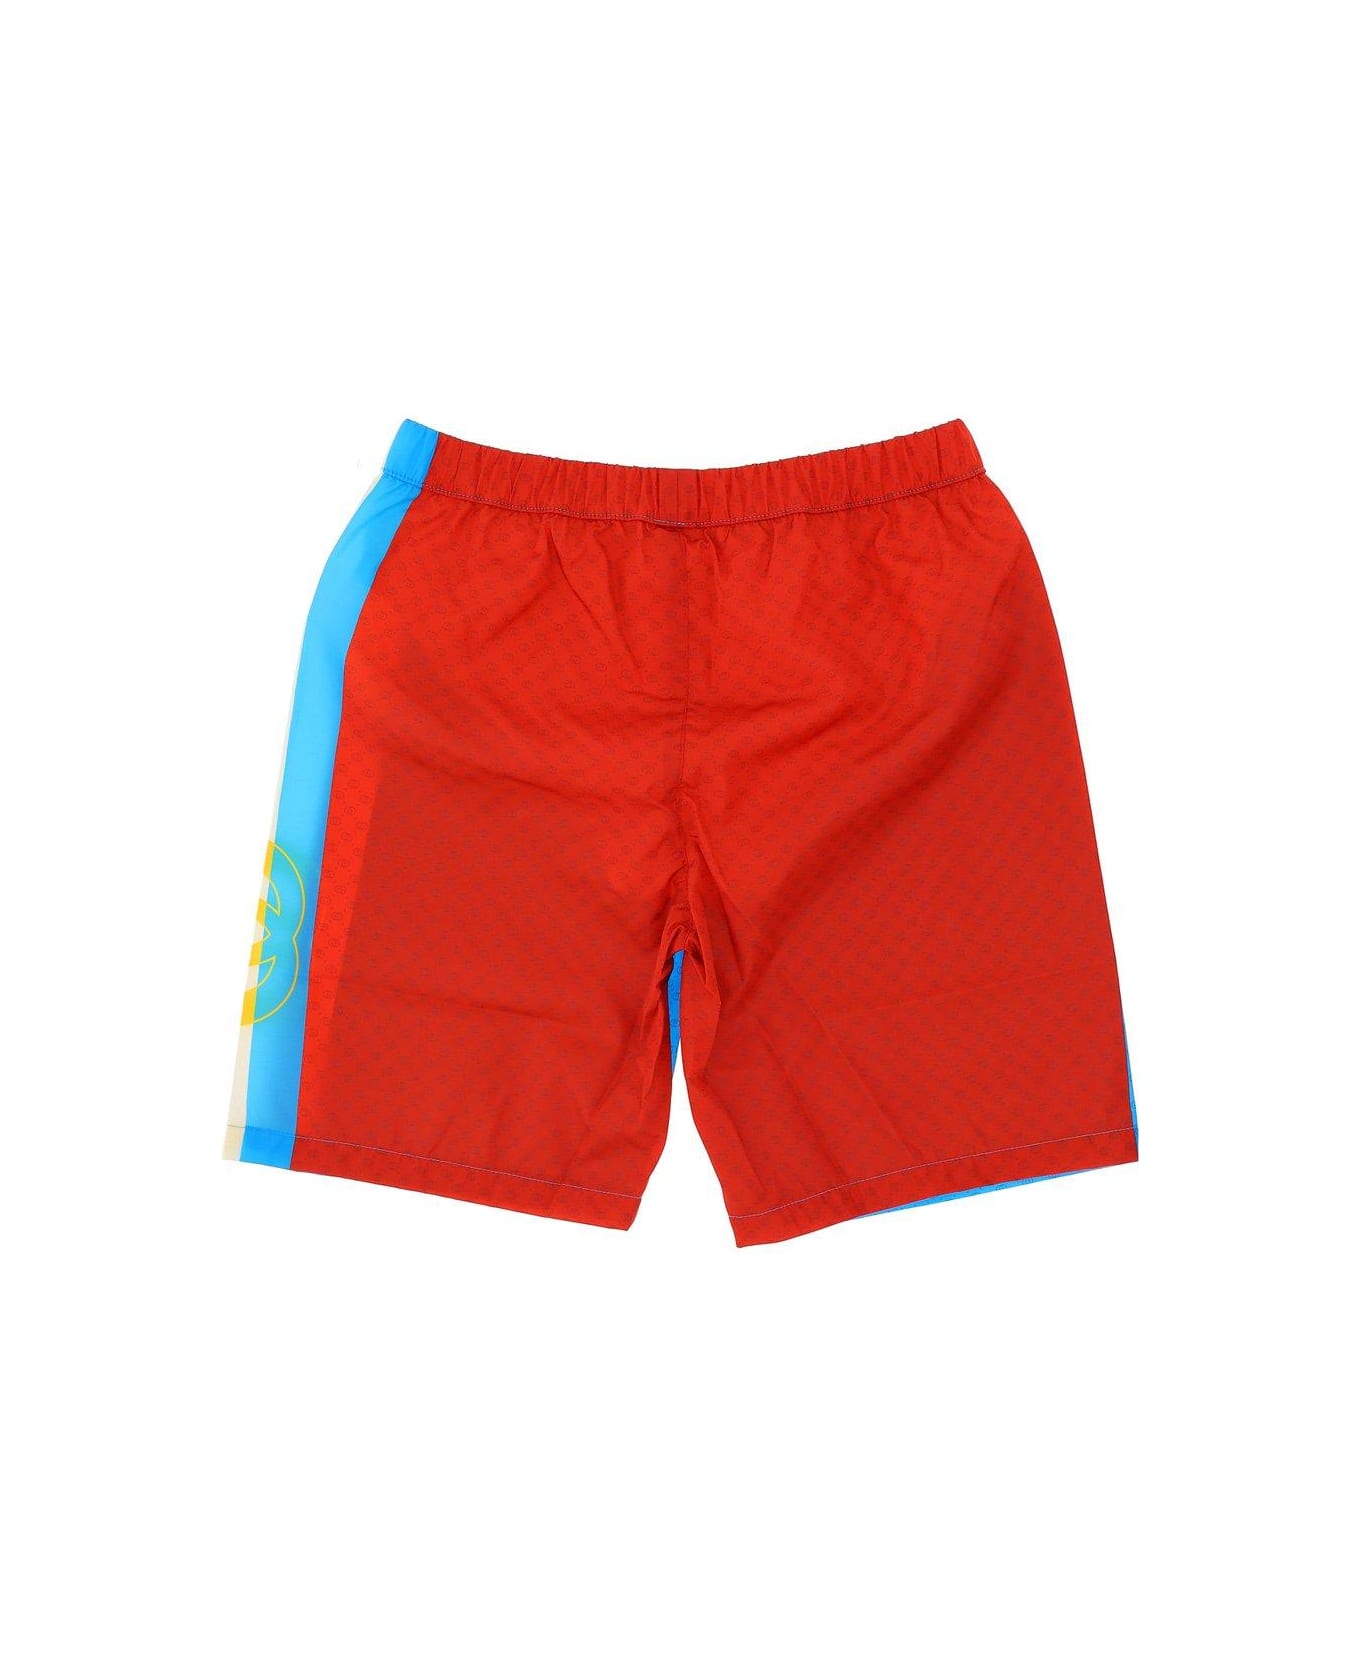 Gucci Logo Printed Swim Shorts - Blue Red